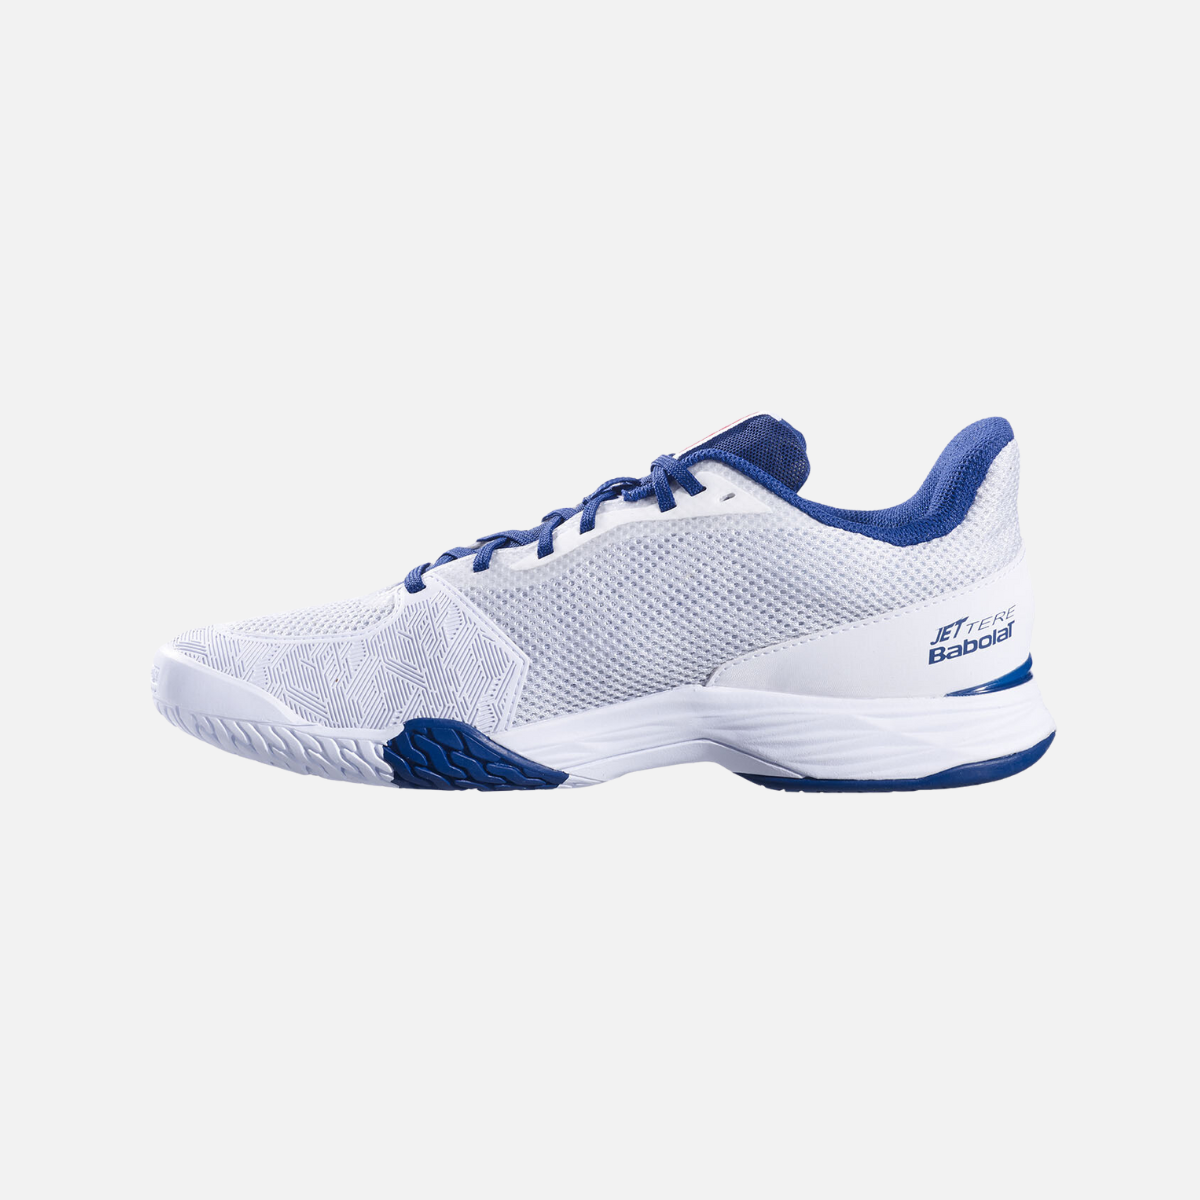 Babolat Jet Tere All Court Men's Tennis Shoes -White/Estate Blue